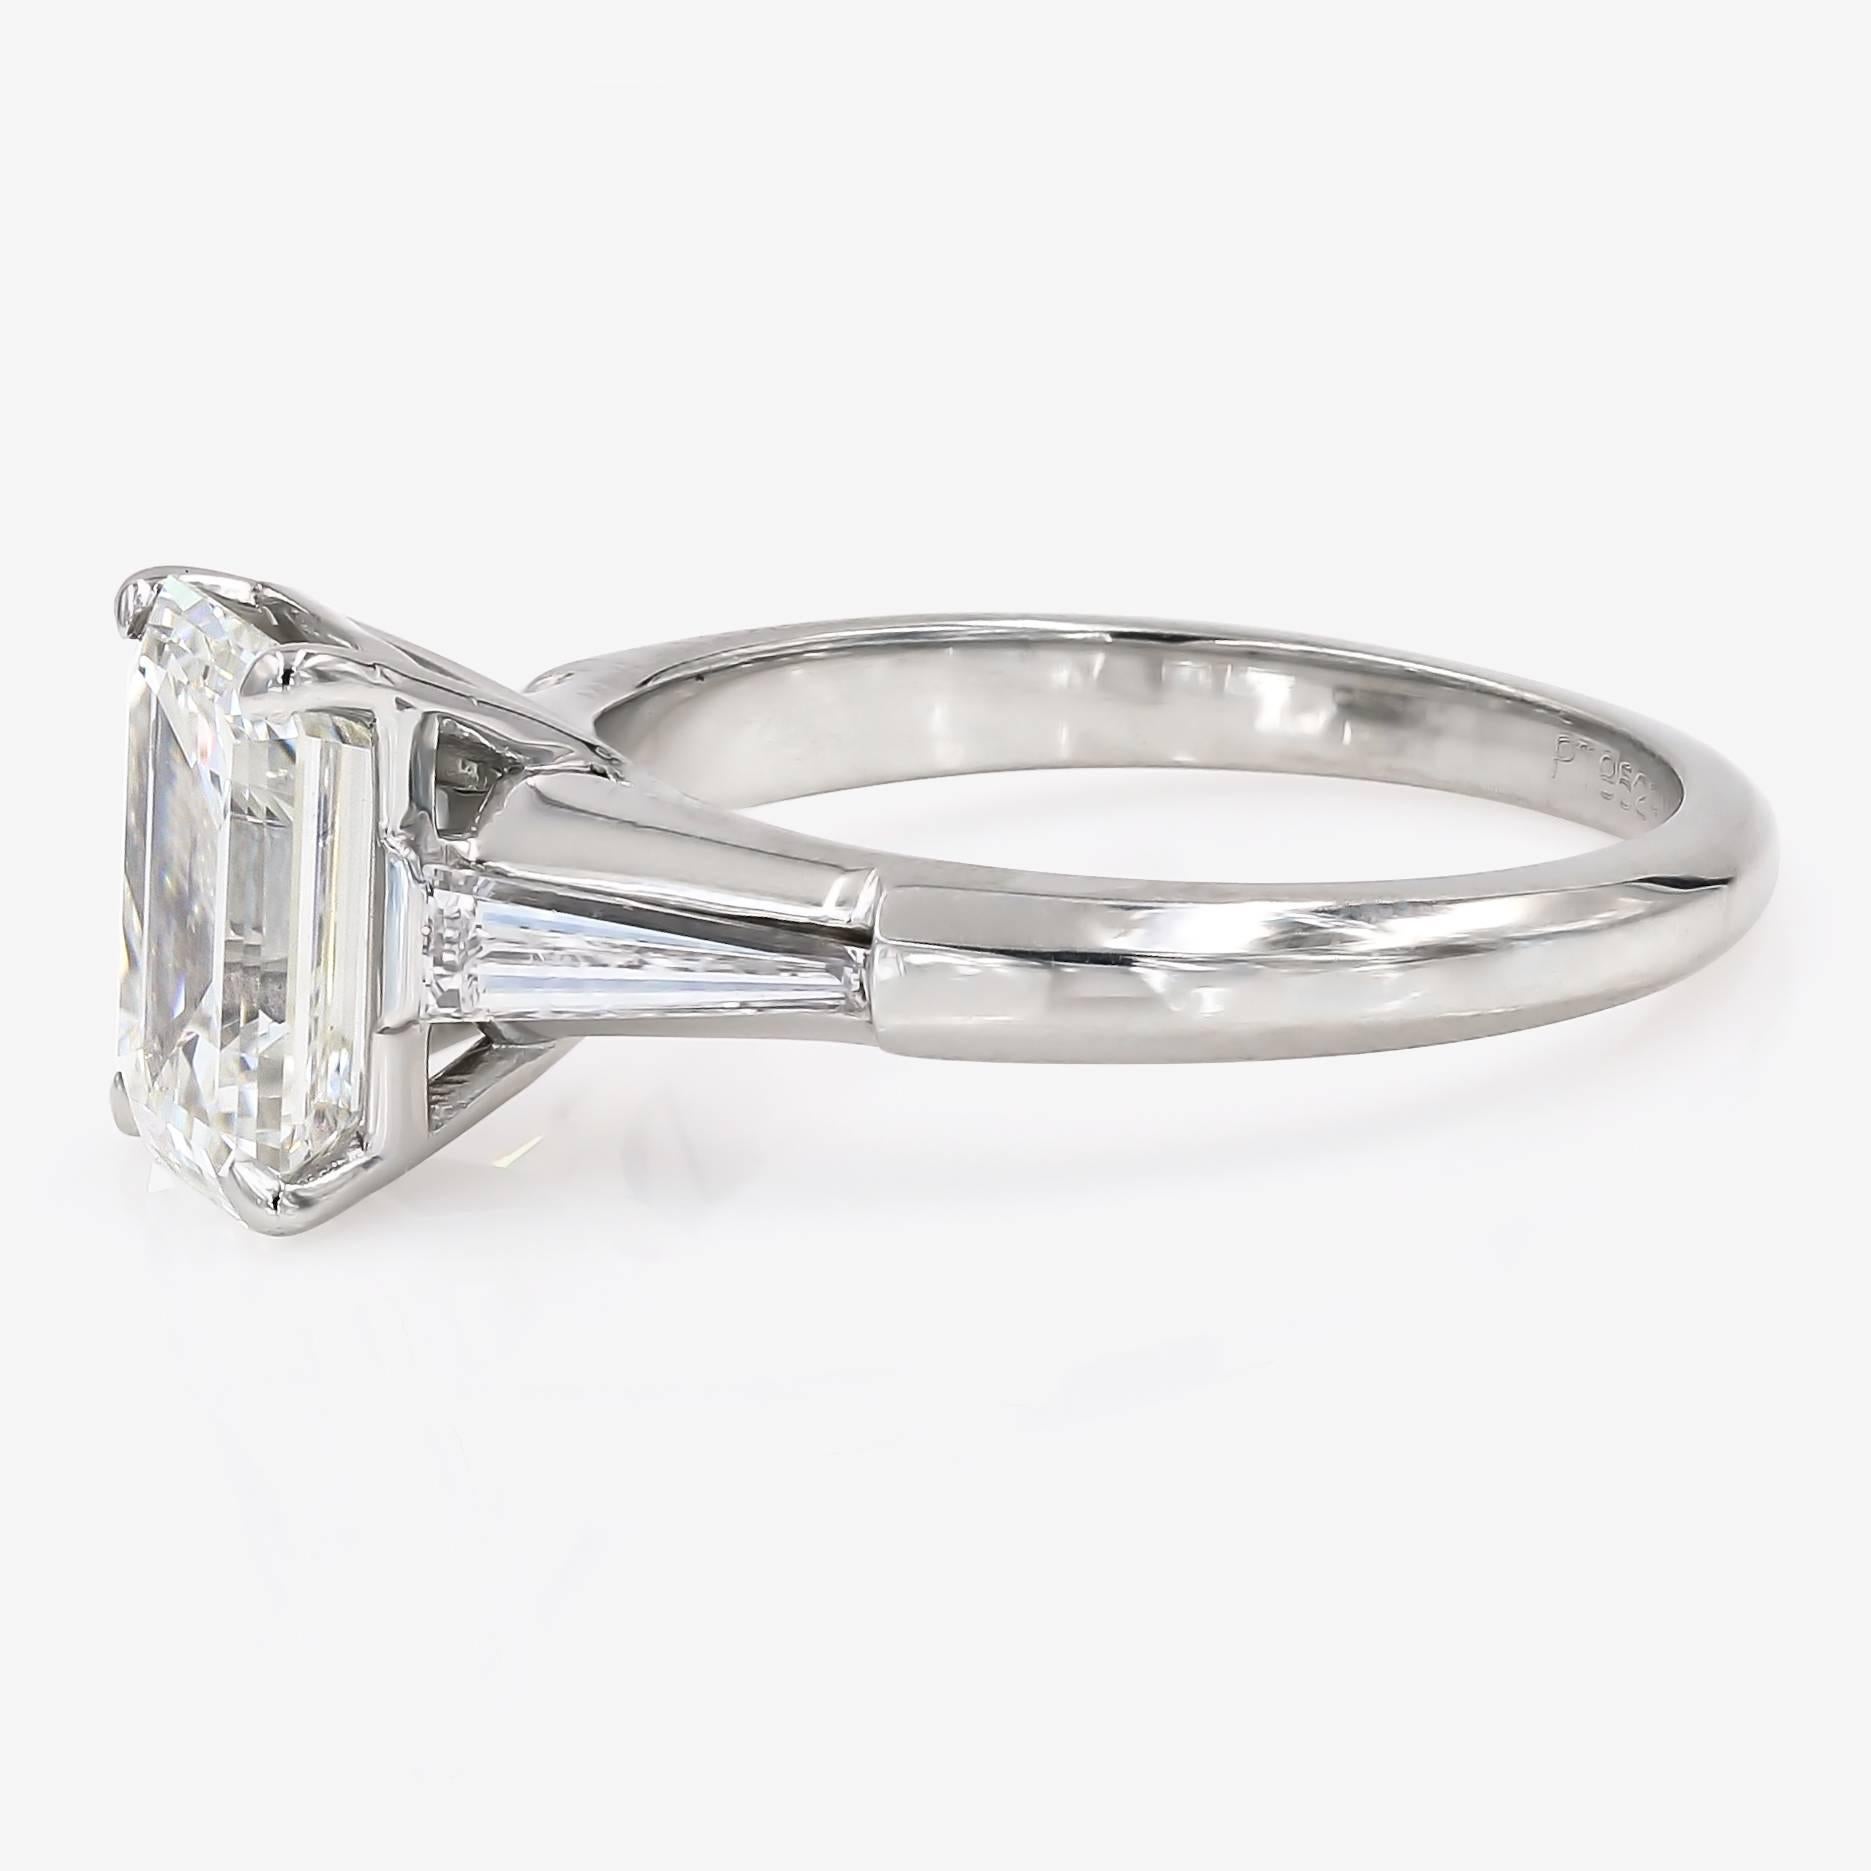 Women's GIA Certified 2.29 Carat Emerald Cut and Baguette Diamond Ring in Platinum